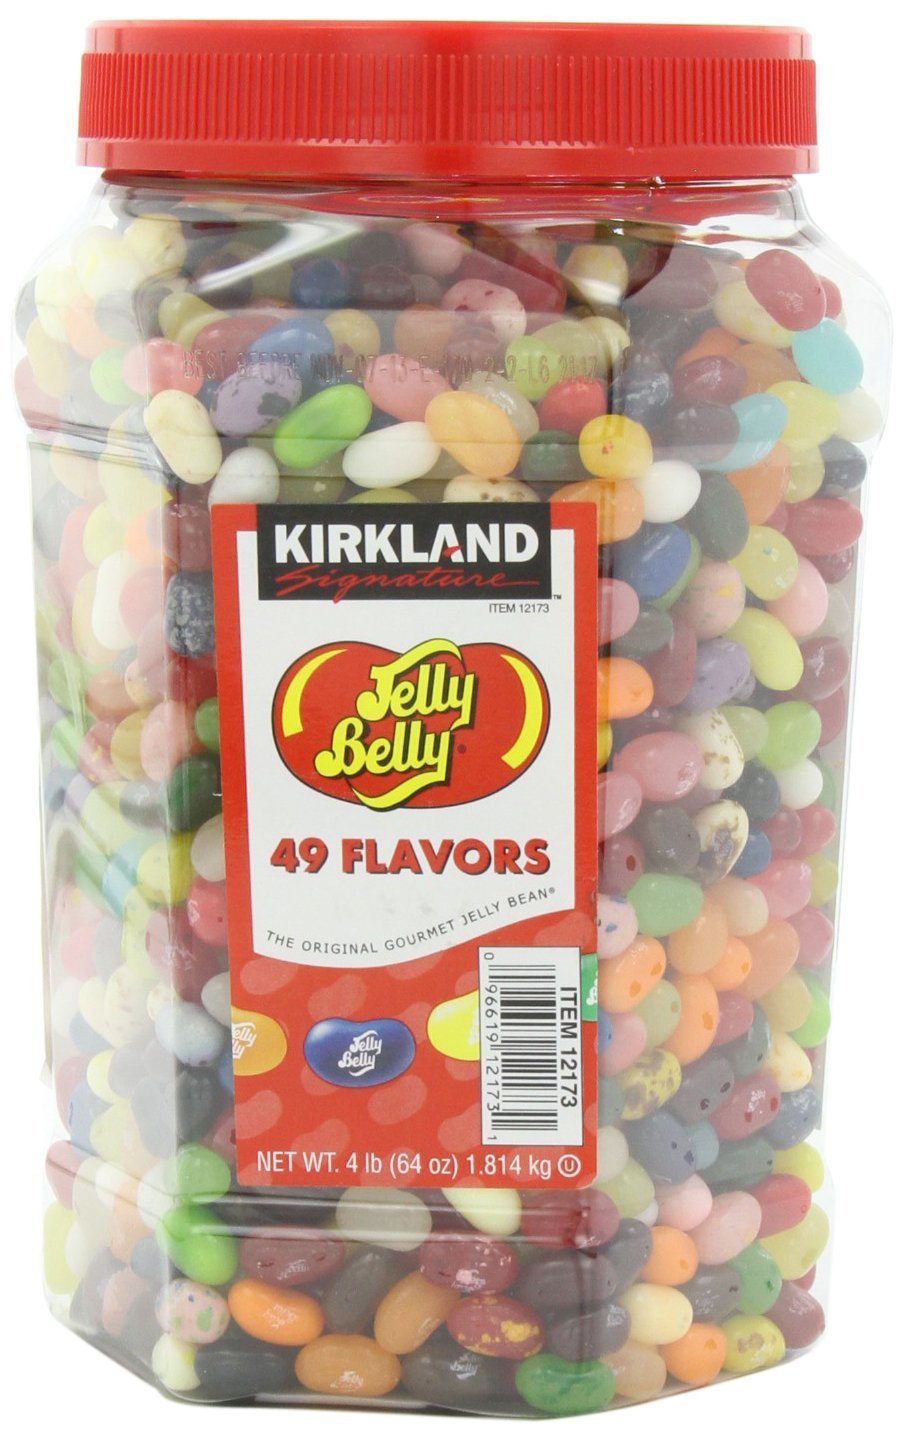 KIRKLAND SIGNATURE 49 Flavors Of The Original Gourmet Jelly Bean